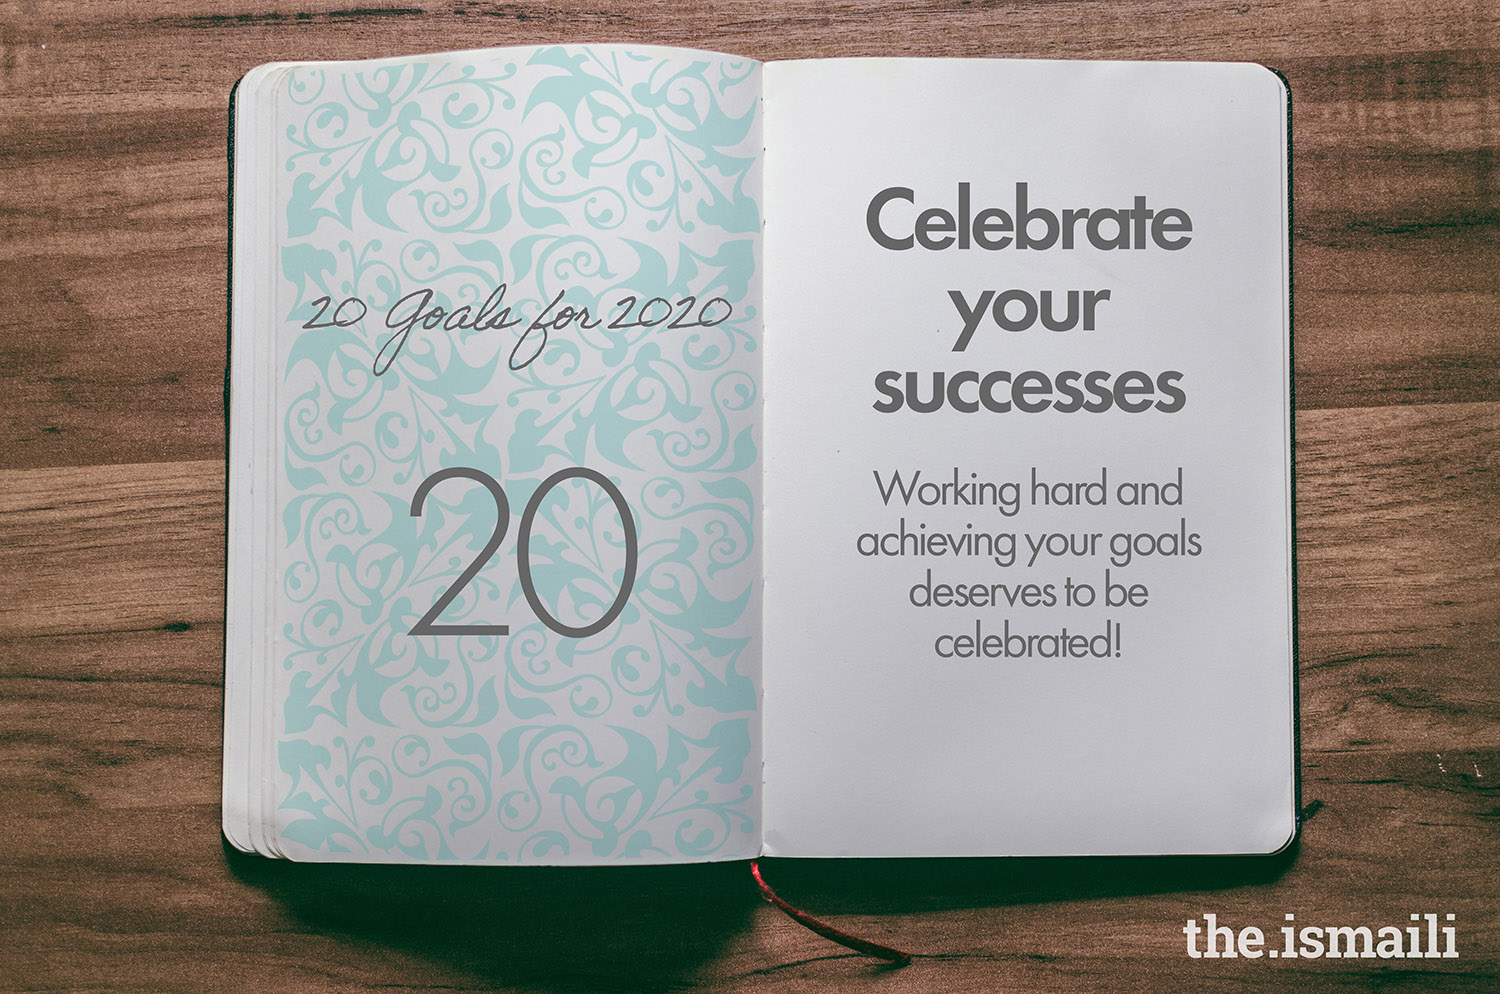 Goal 20: Celebrate your successes